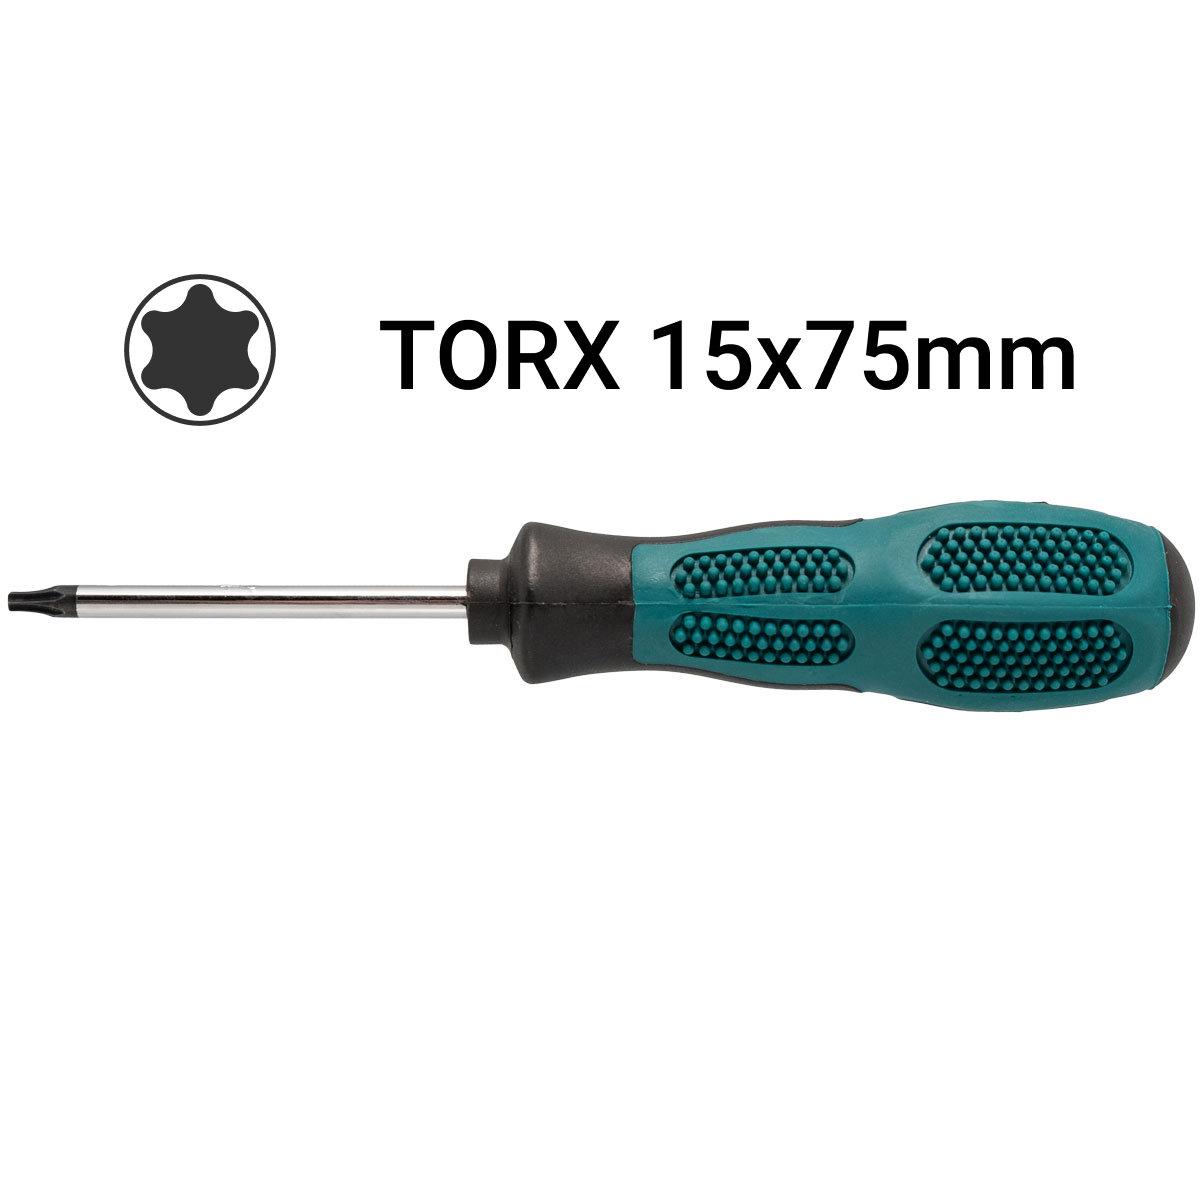 Destornillador Pro-soft Torx T15x75mm